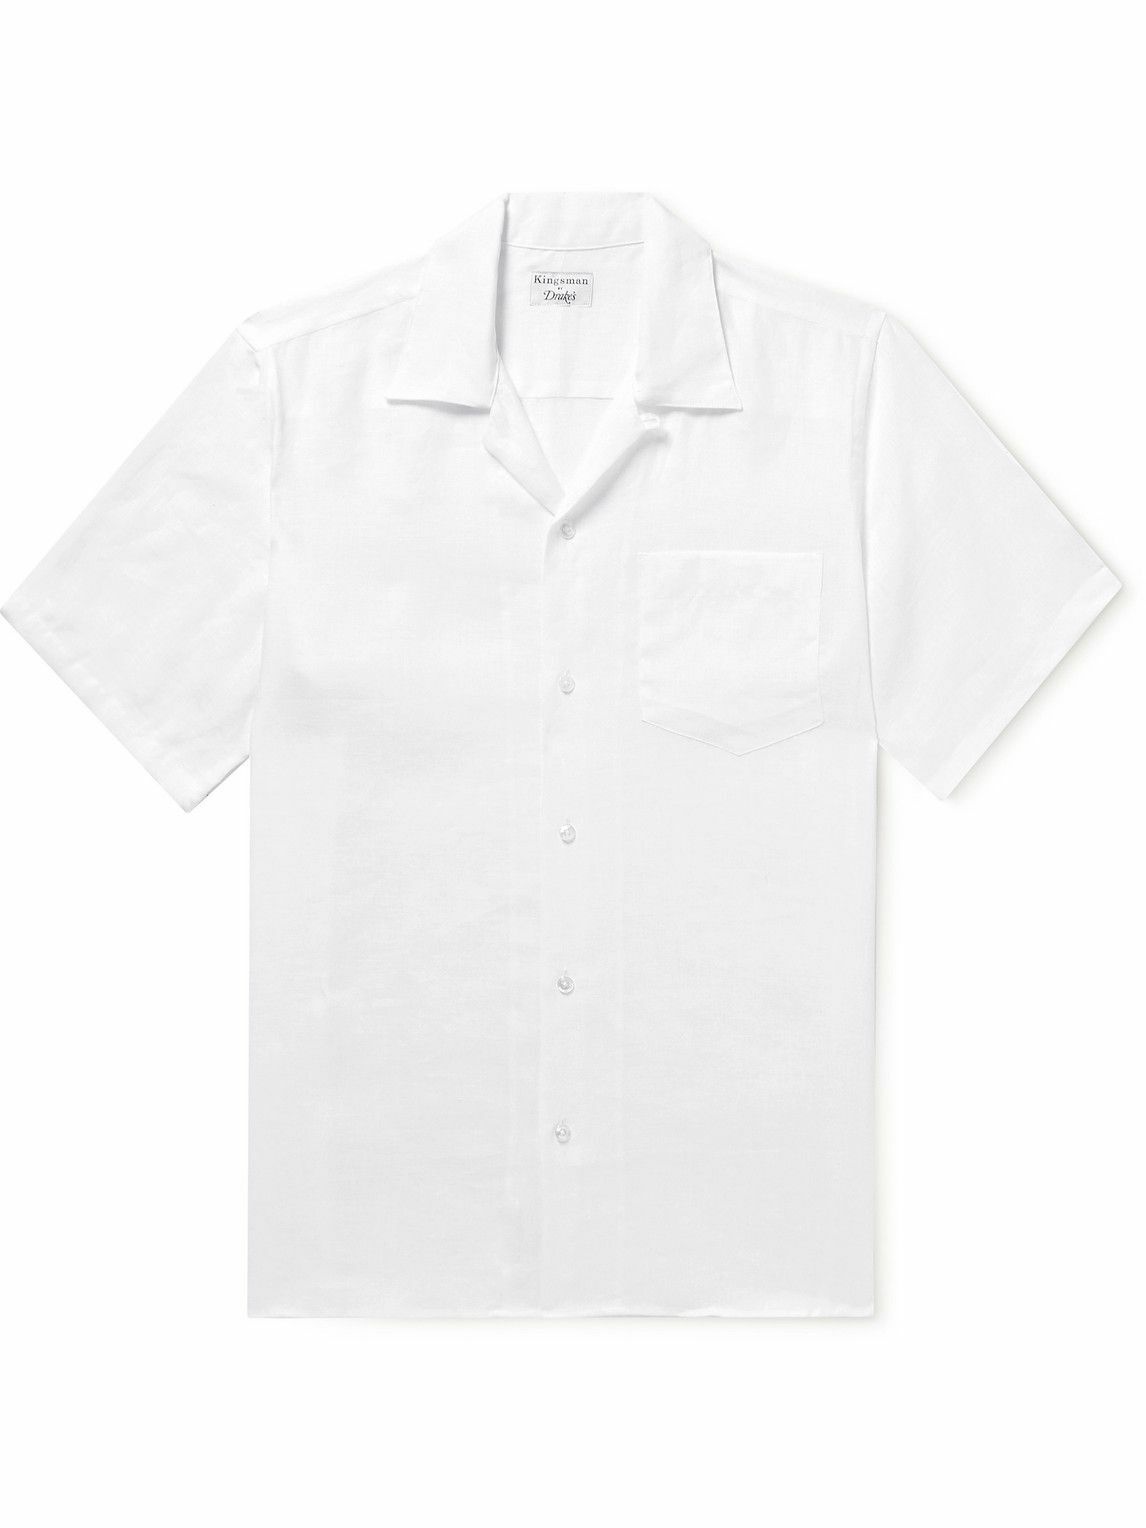 Kingsman - Camp-Collar Linen Shirt - White Kingsman